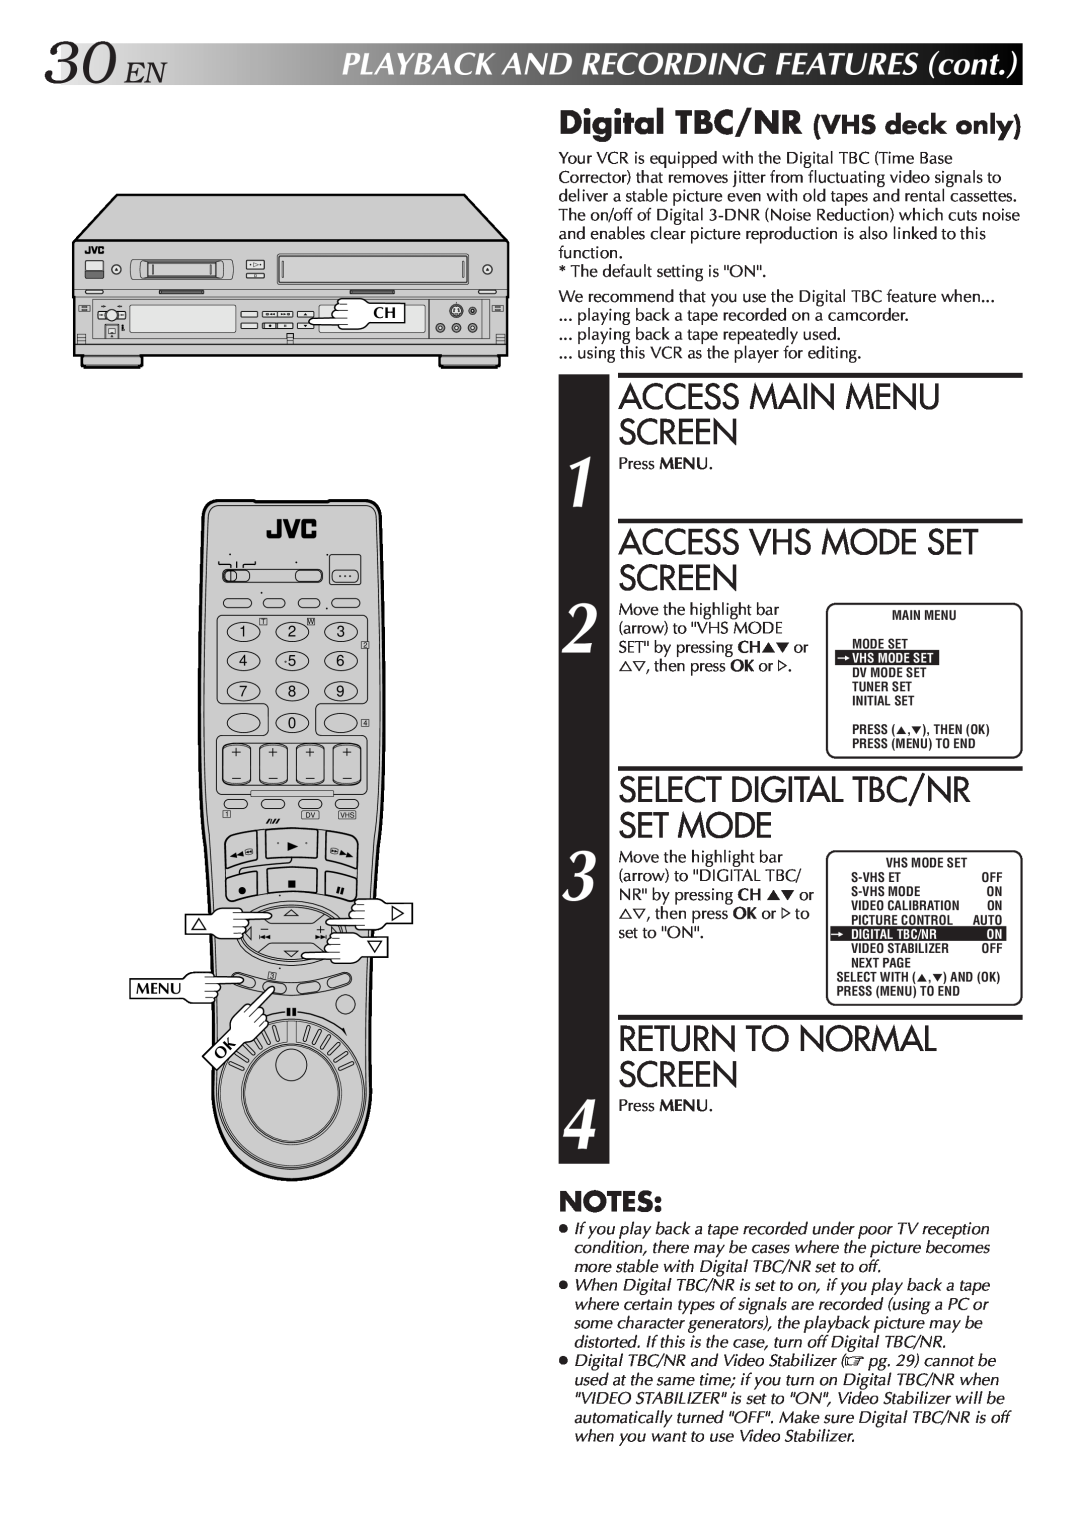 JVC Model HR-DVS1U manual 30EN, Digital TBC/NR VHS deck only, Select Digital Tbc/Nr, Access Main Menu, Screen, Set Mode 